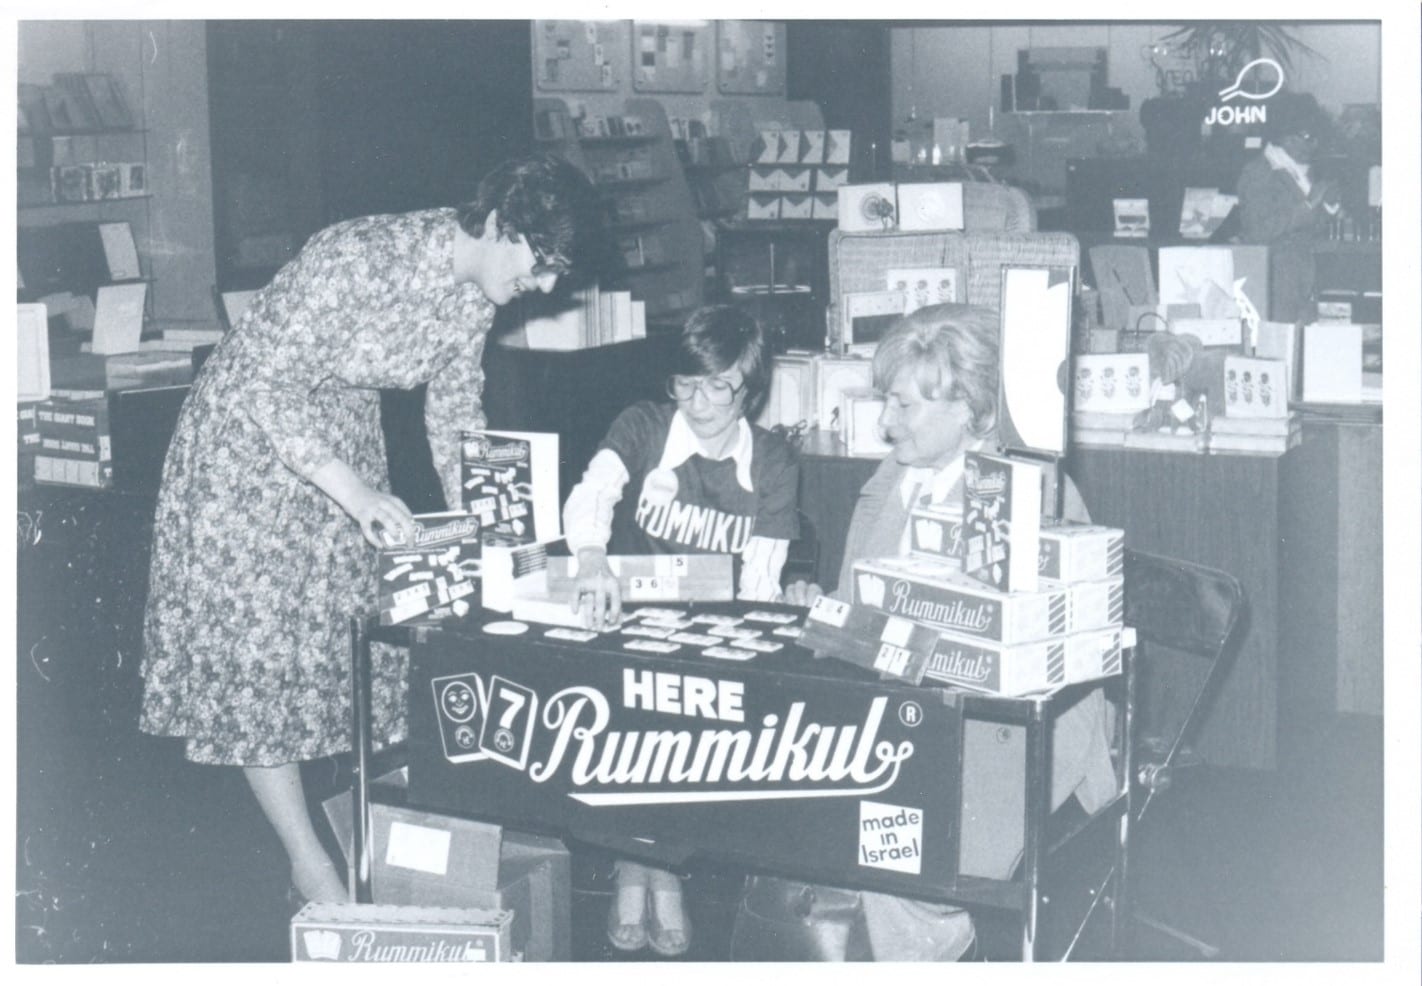 The official rummikub book : Hertzano, Ephraim : Free Download, Borrow, and  Streaming : Internet Archive